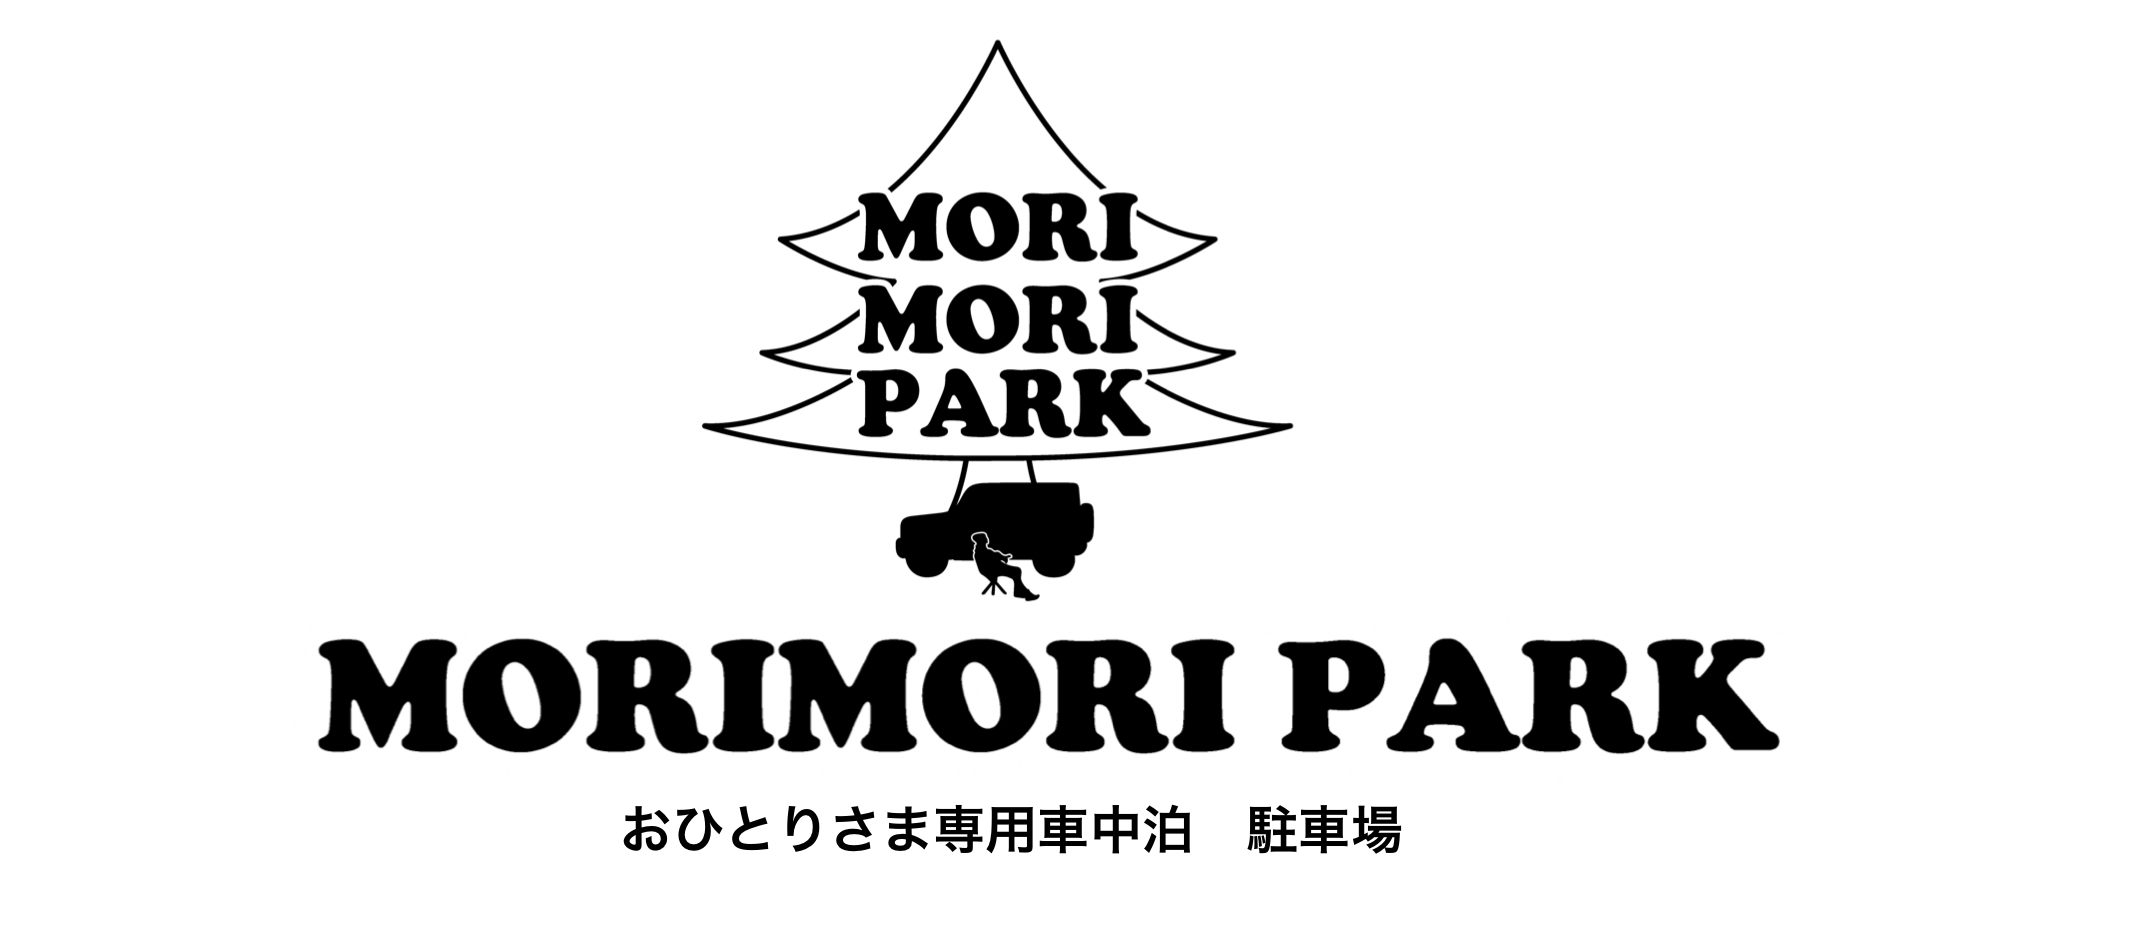 MORIMORI PARKさん本日オープンです。 - hananoki 花の木